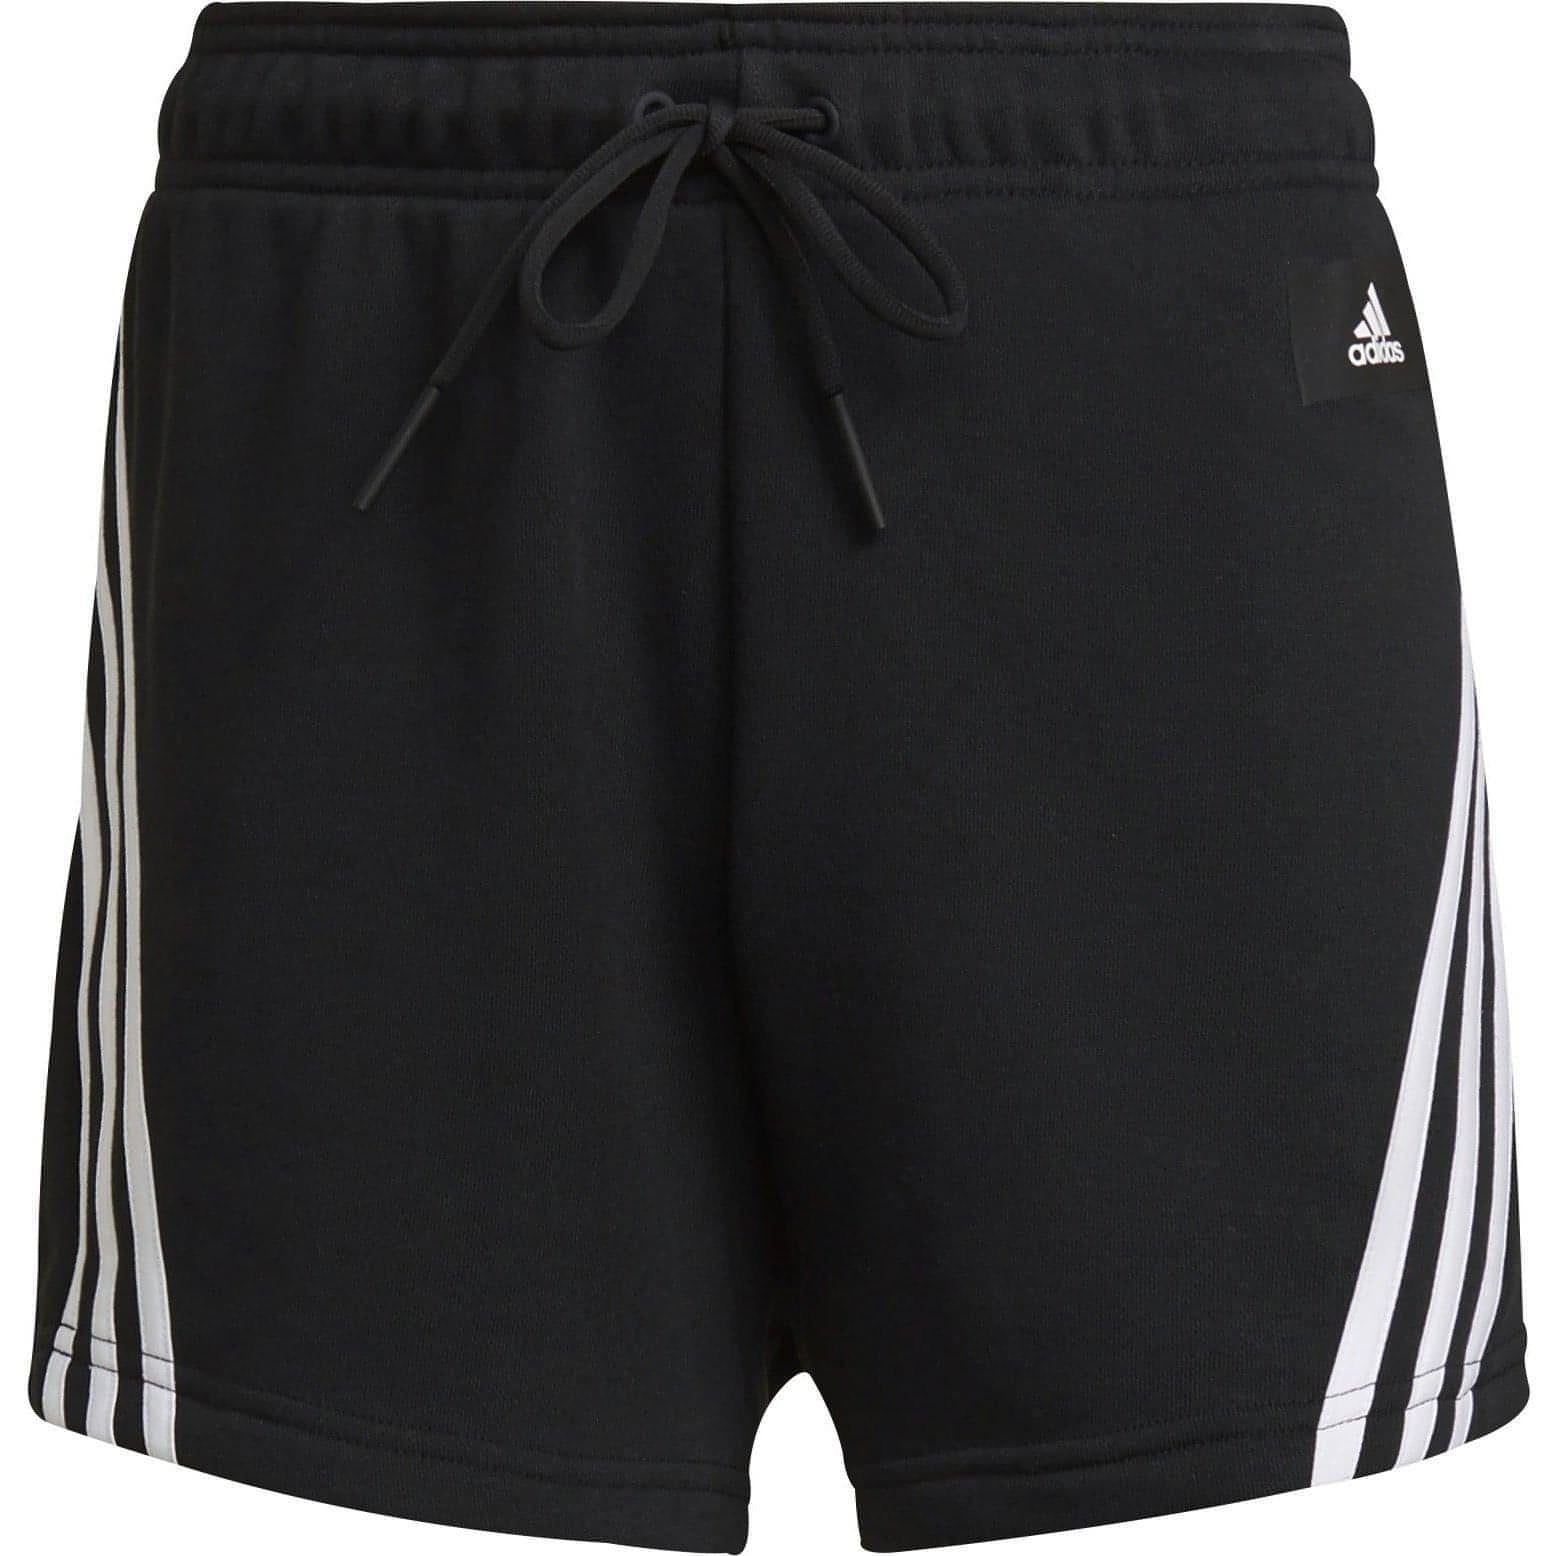 Adidas Future Icon Stripes Shorts Gu9690 Front - Front View